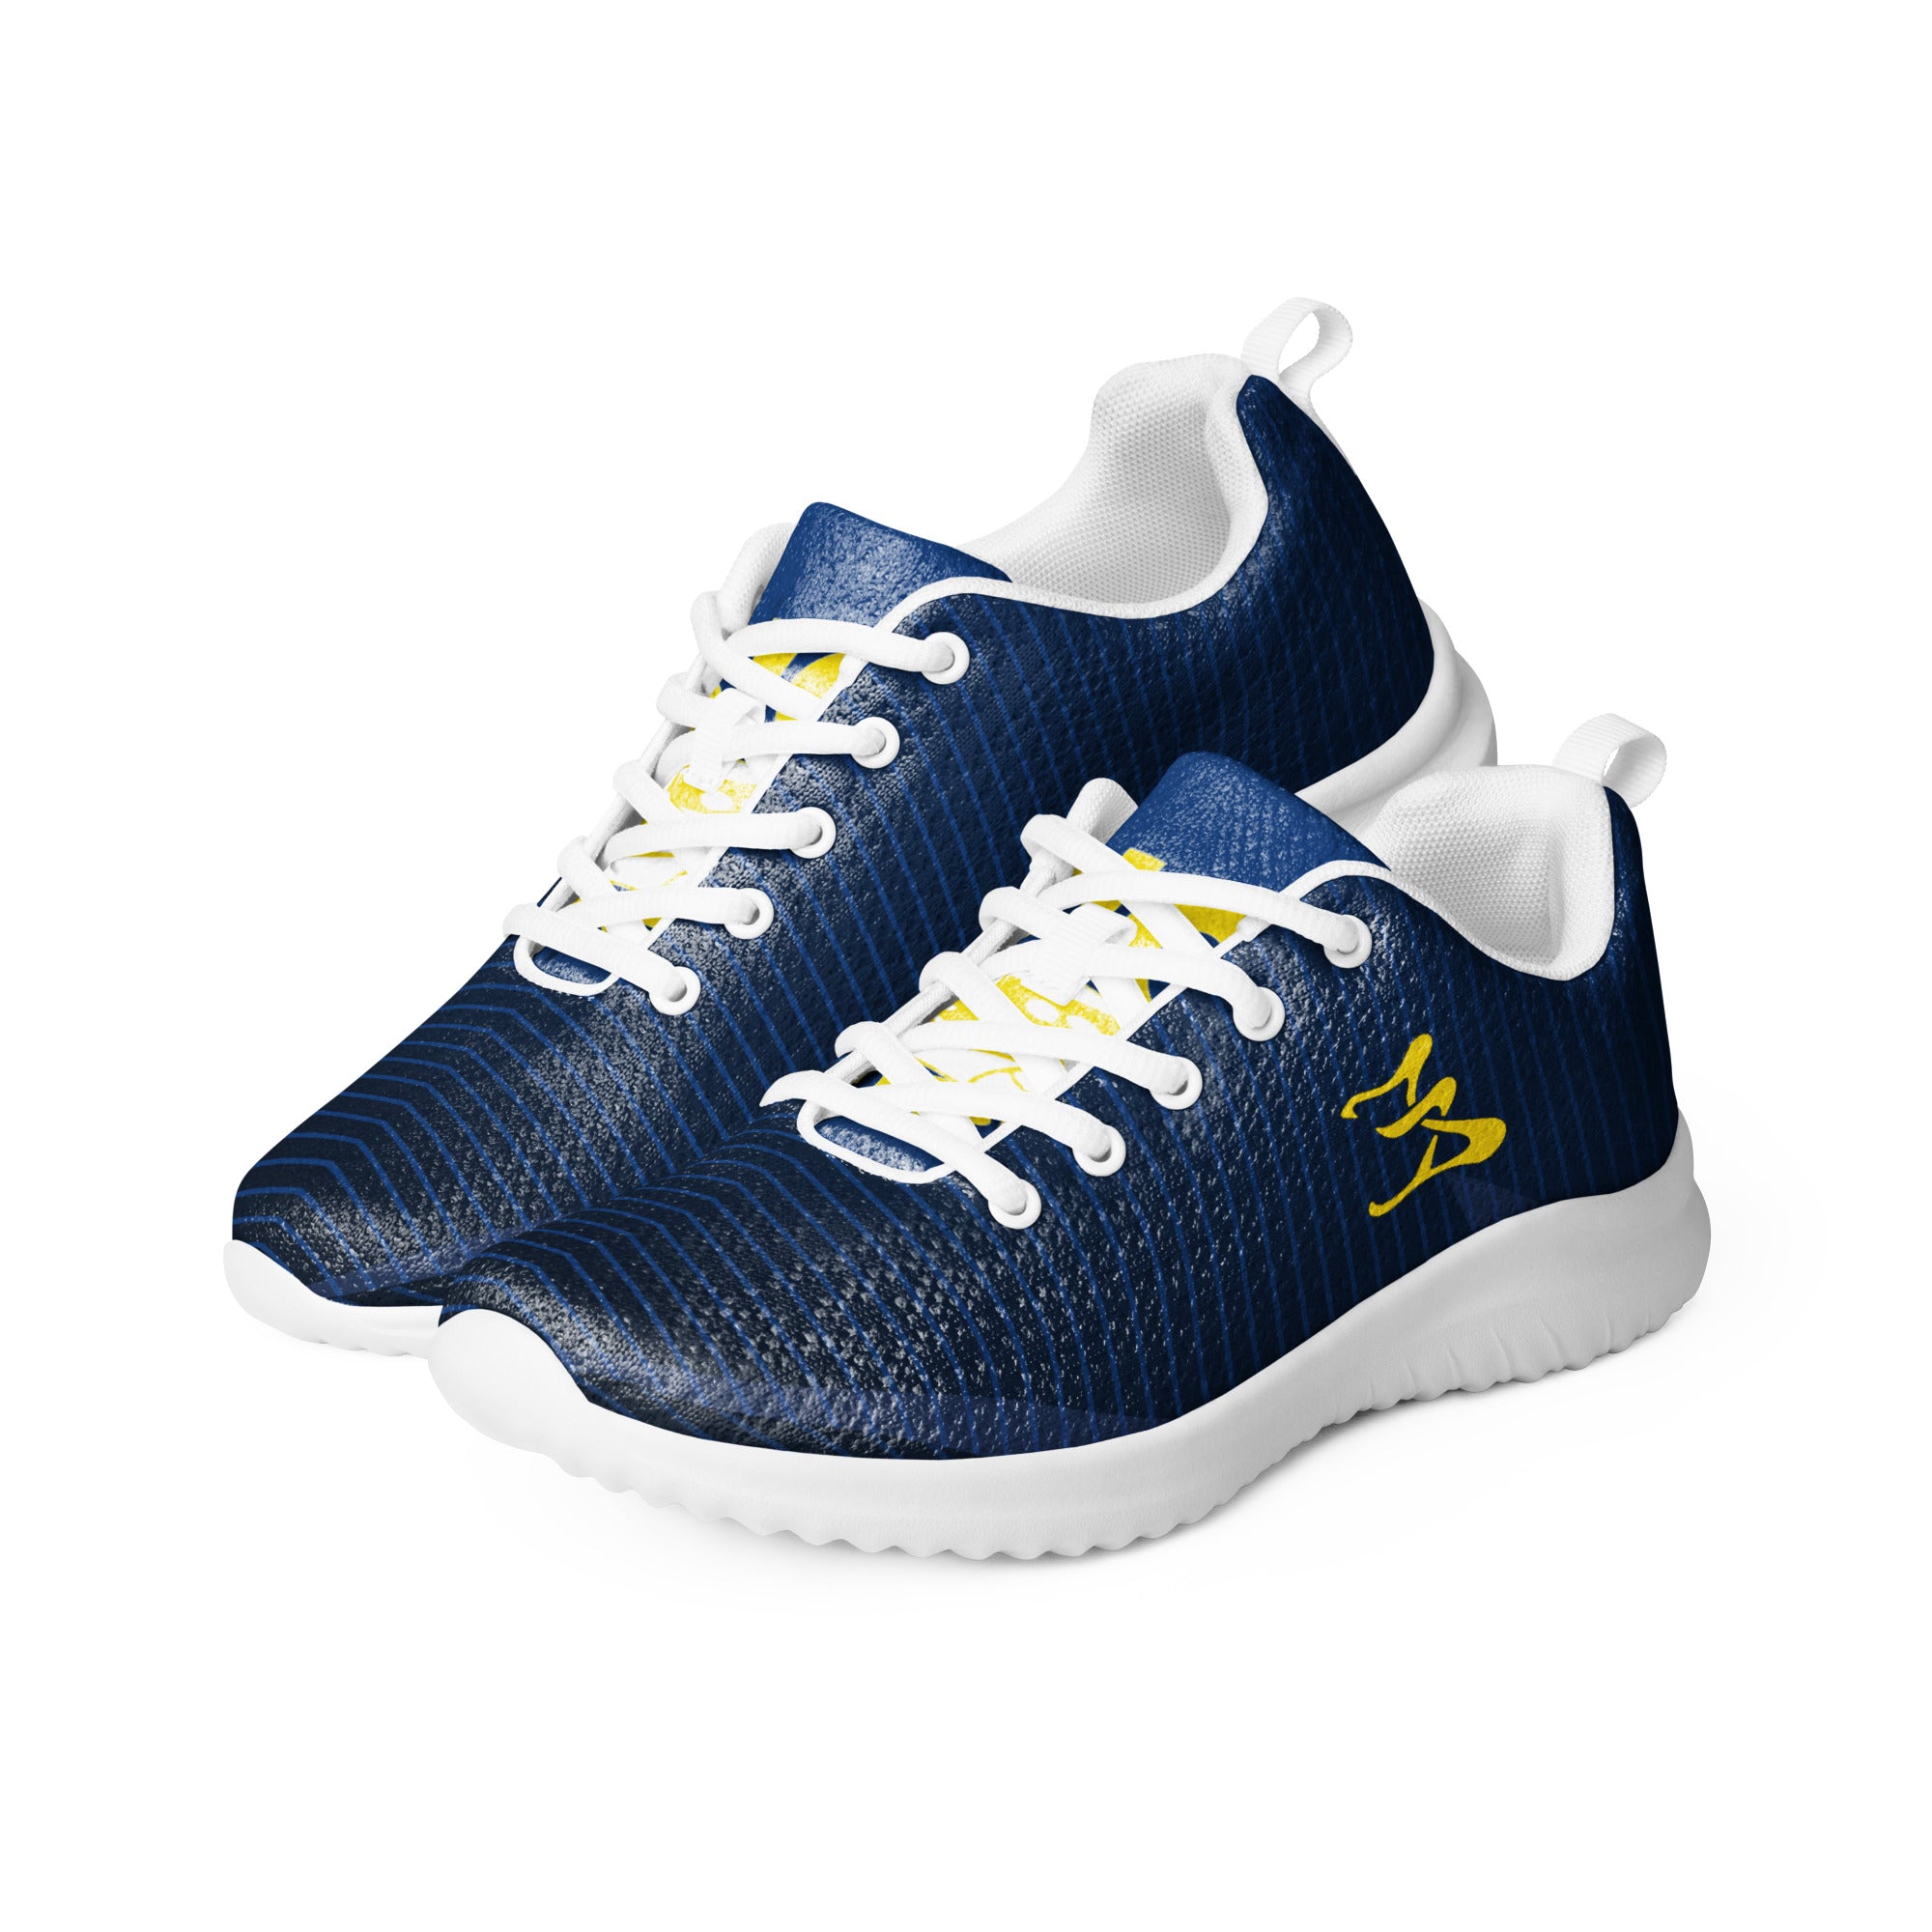 Men’s athletic walking shoes navy blue